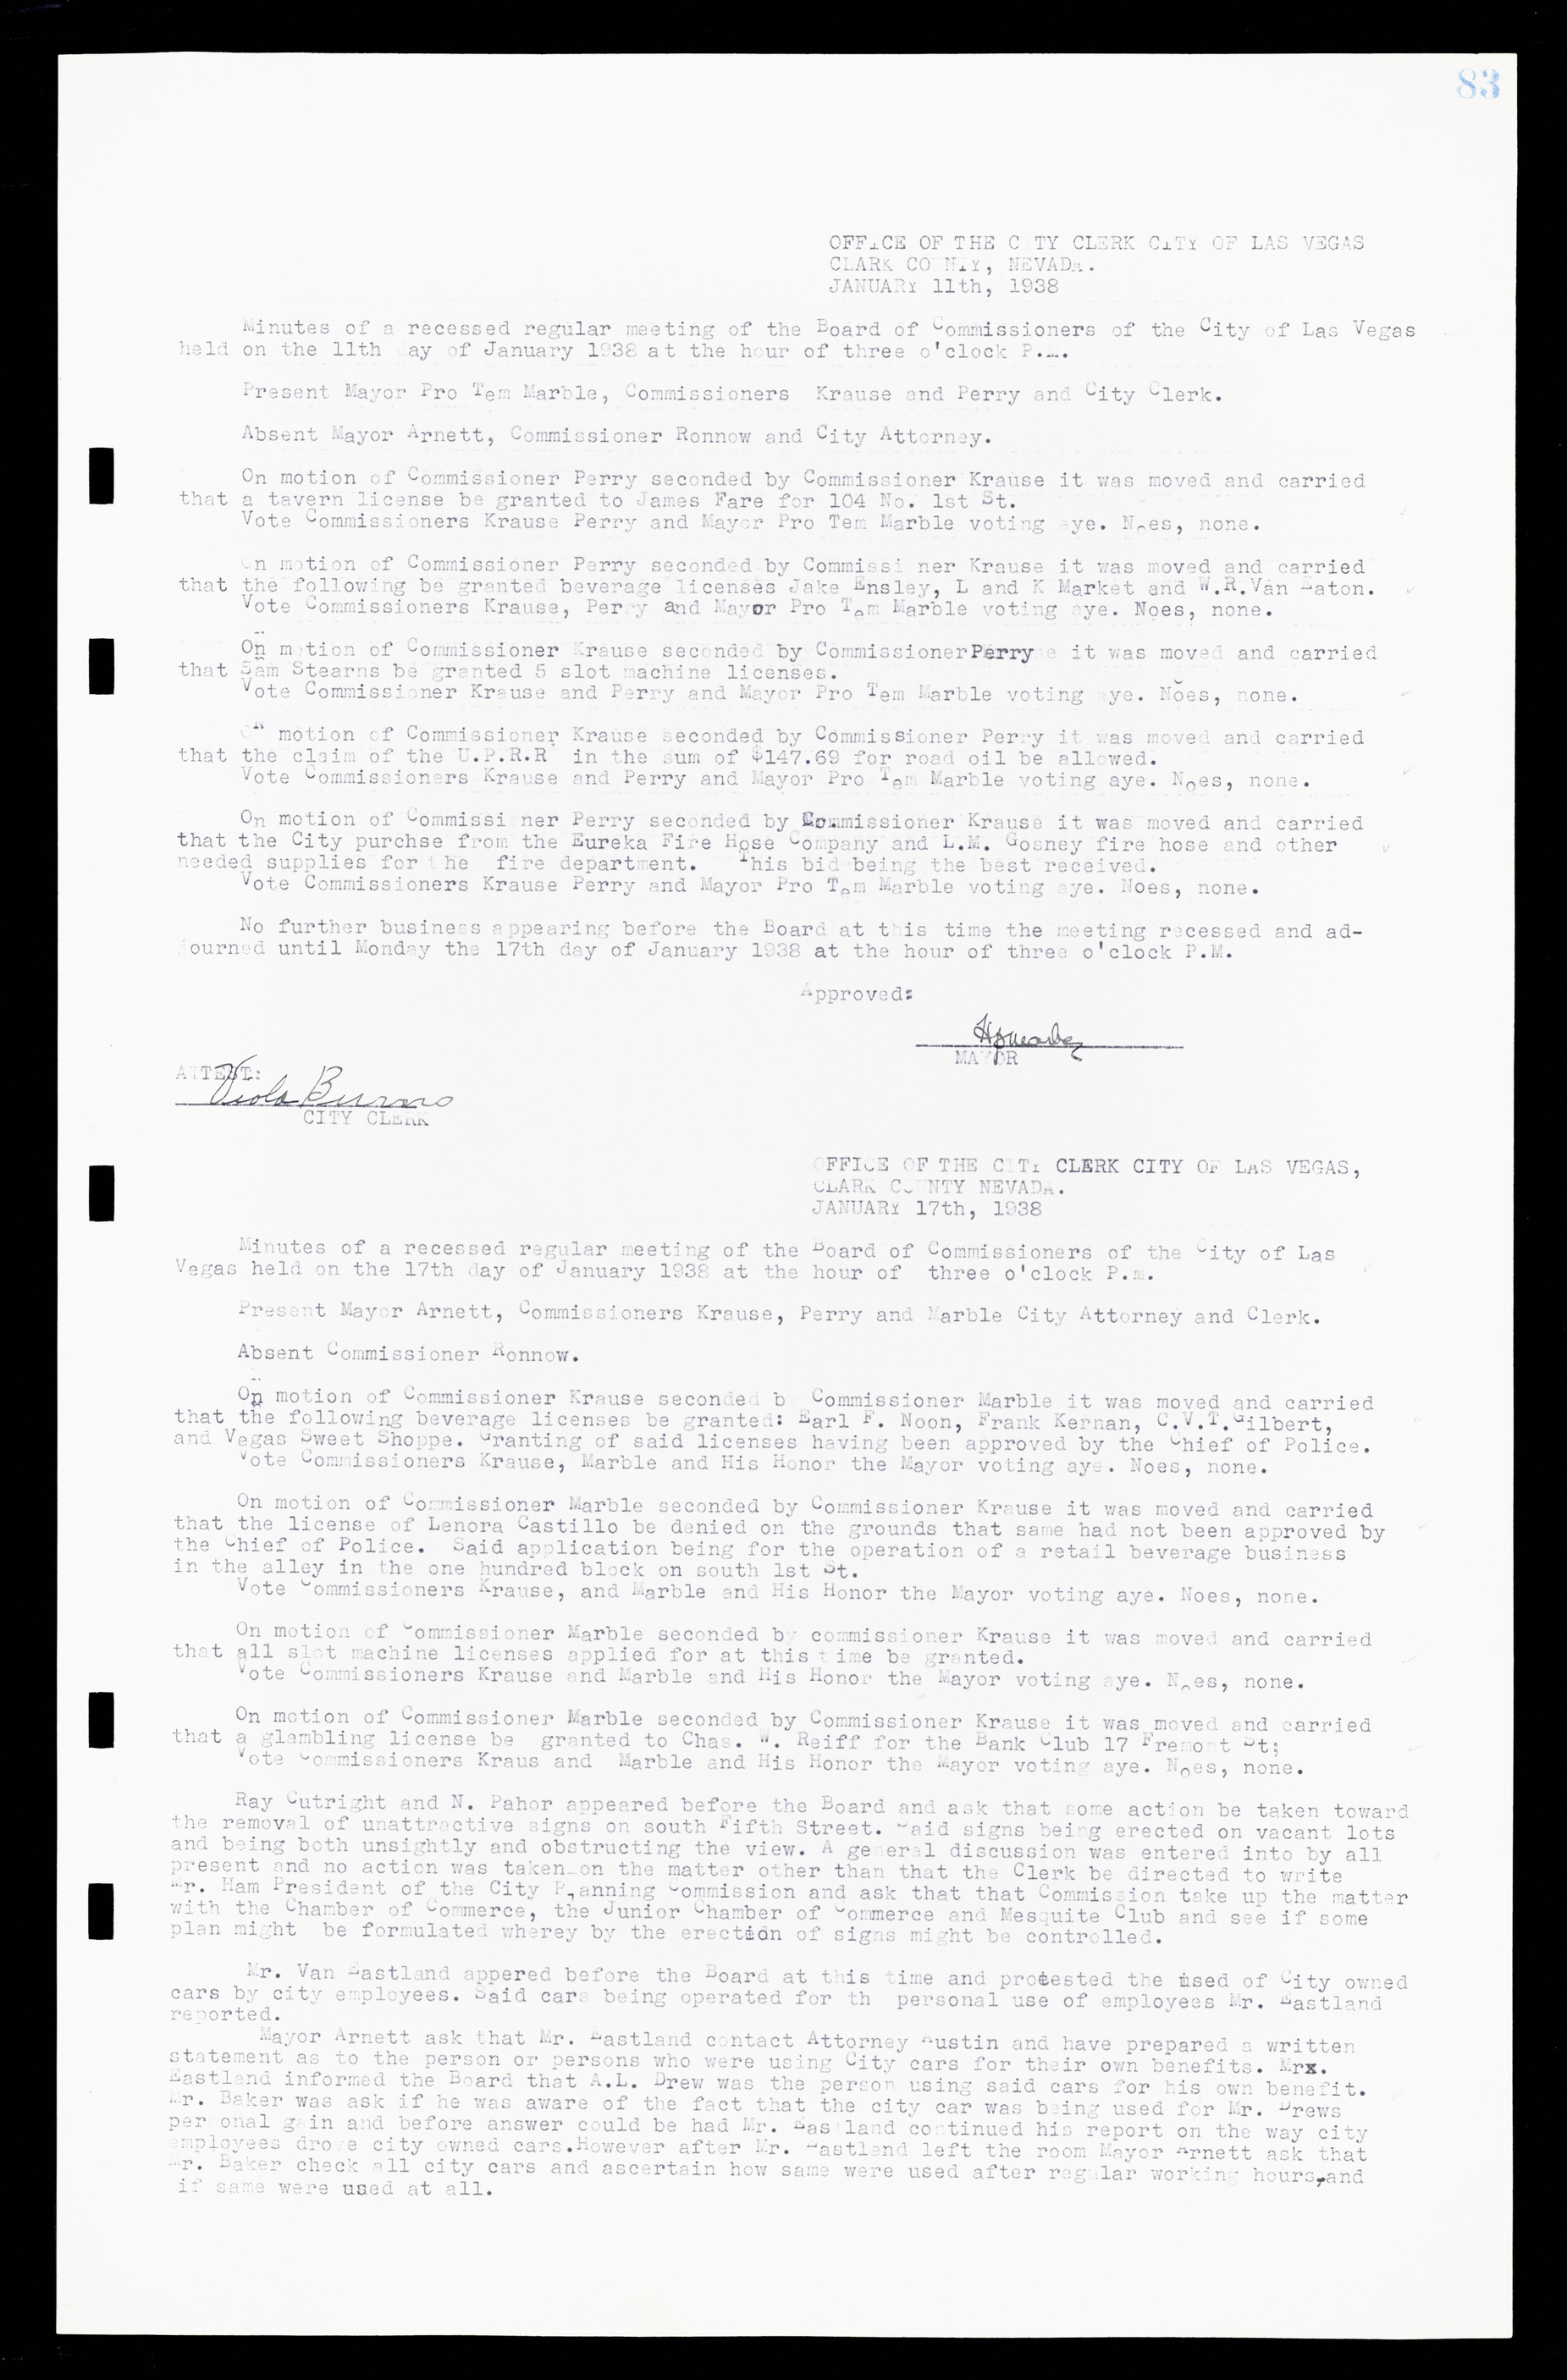 Las Vegas City Commission Minutes, February 17, 1937 to August 4, 1942, lvc000004-94